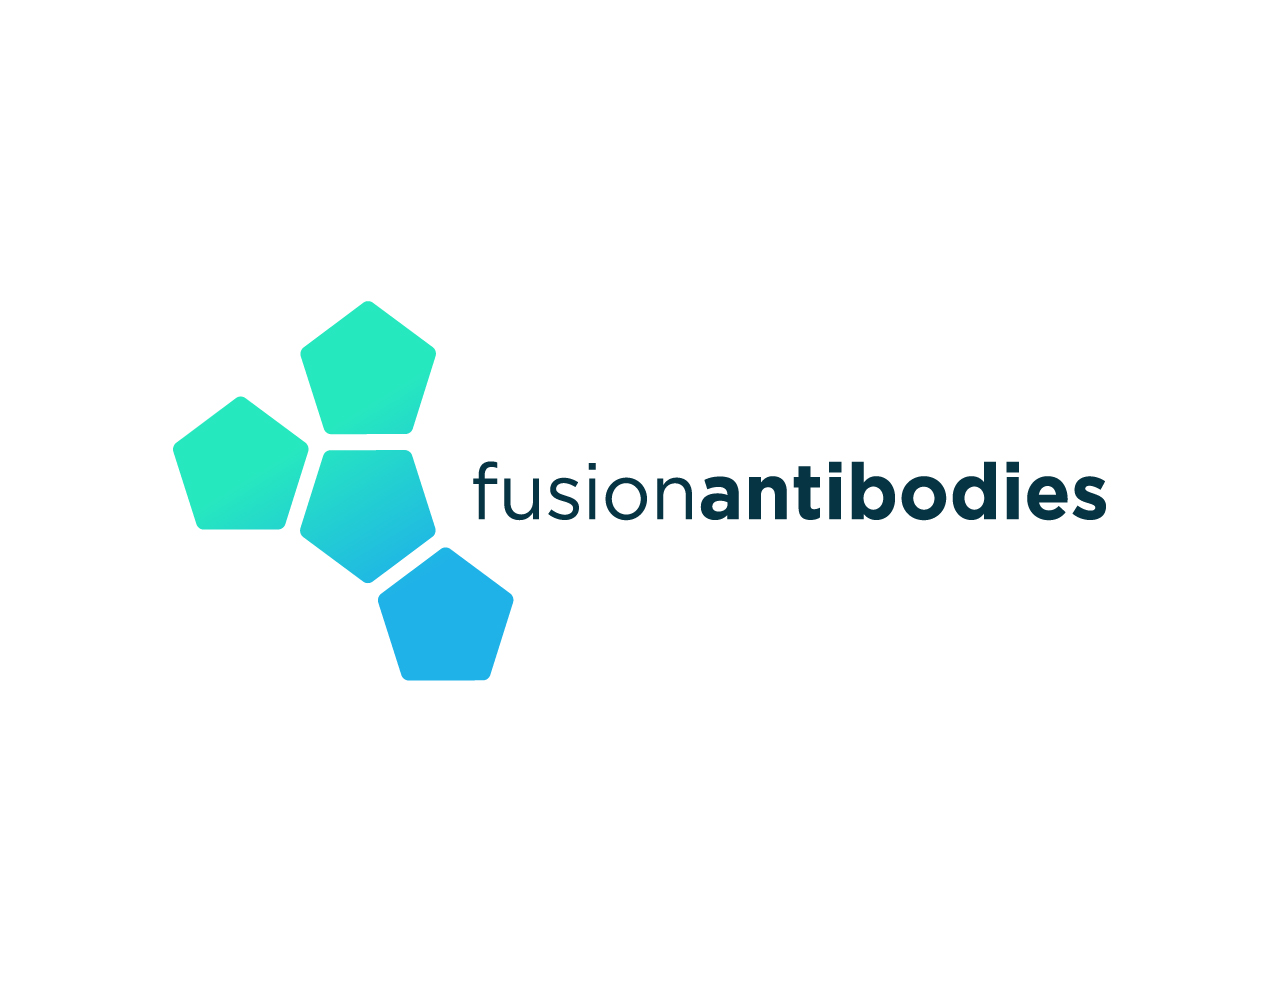 Fusion Antibodies